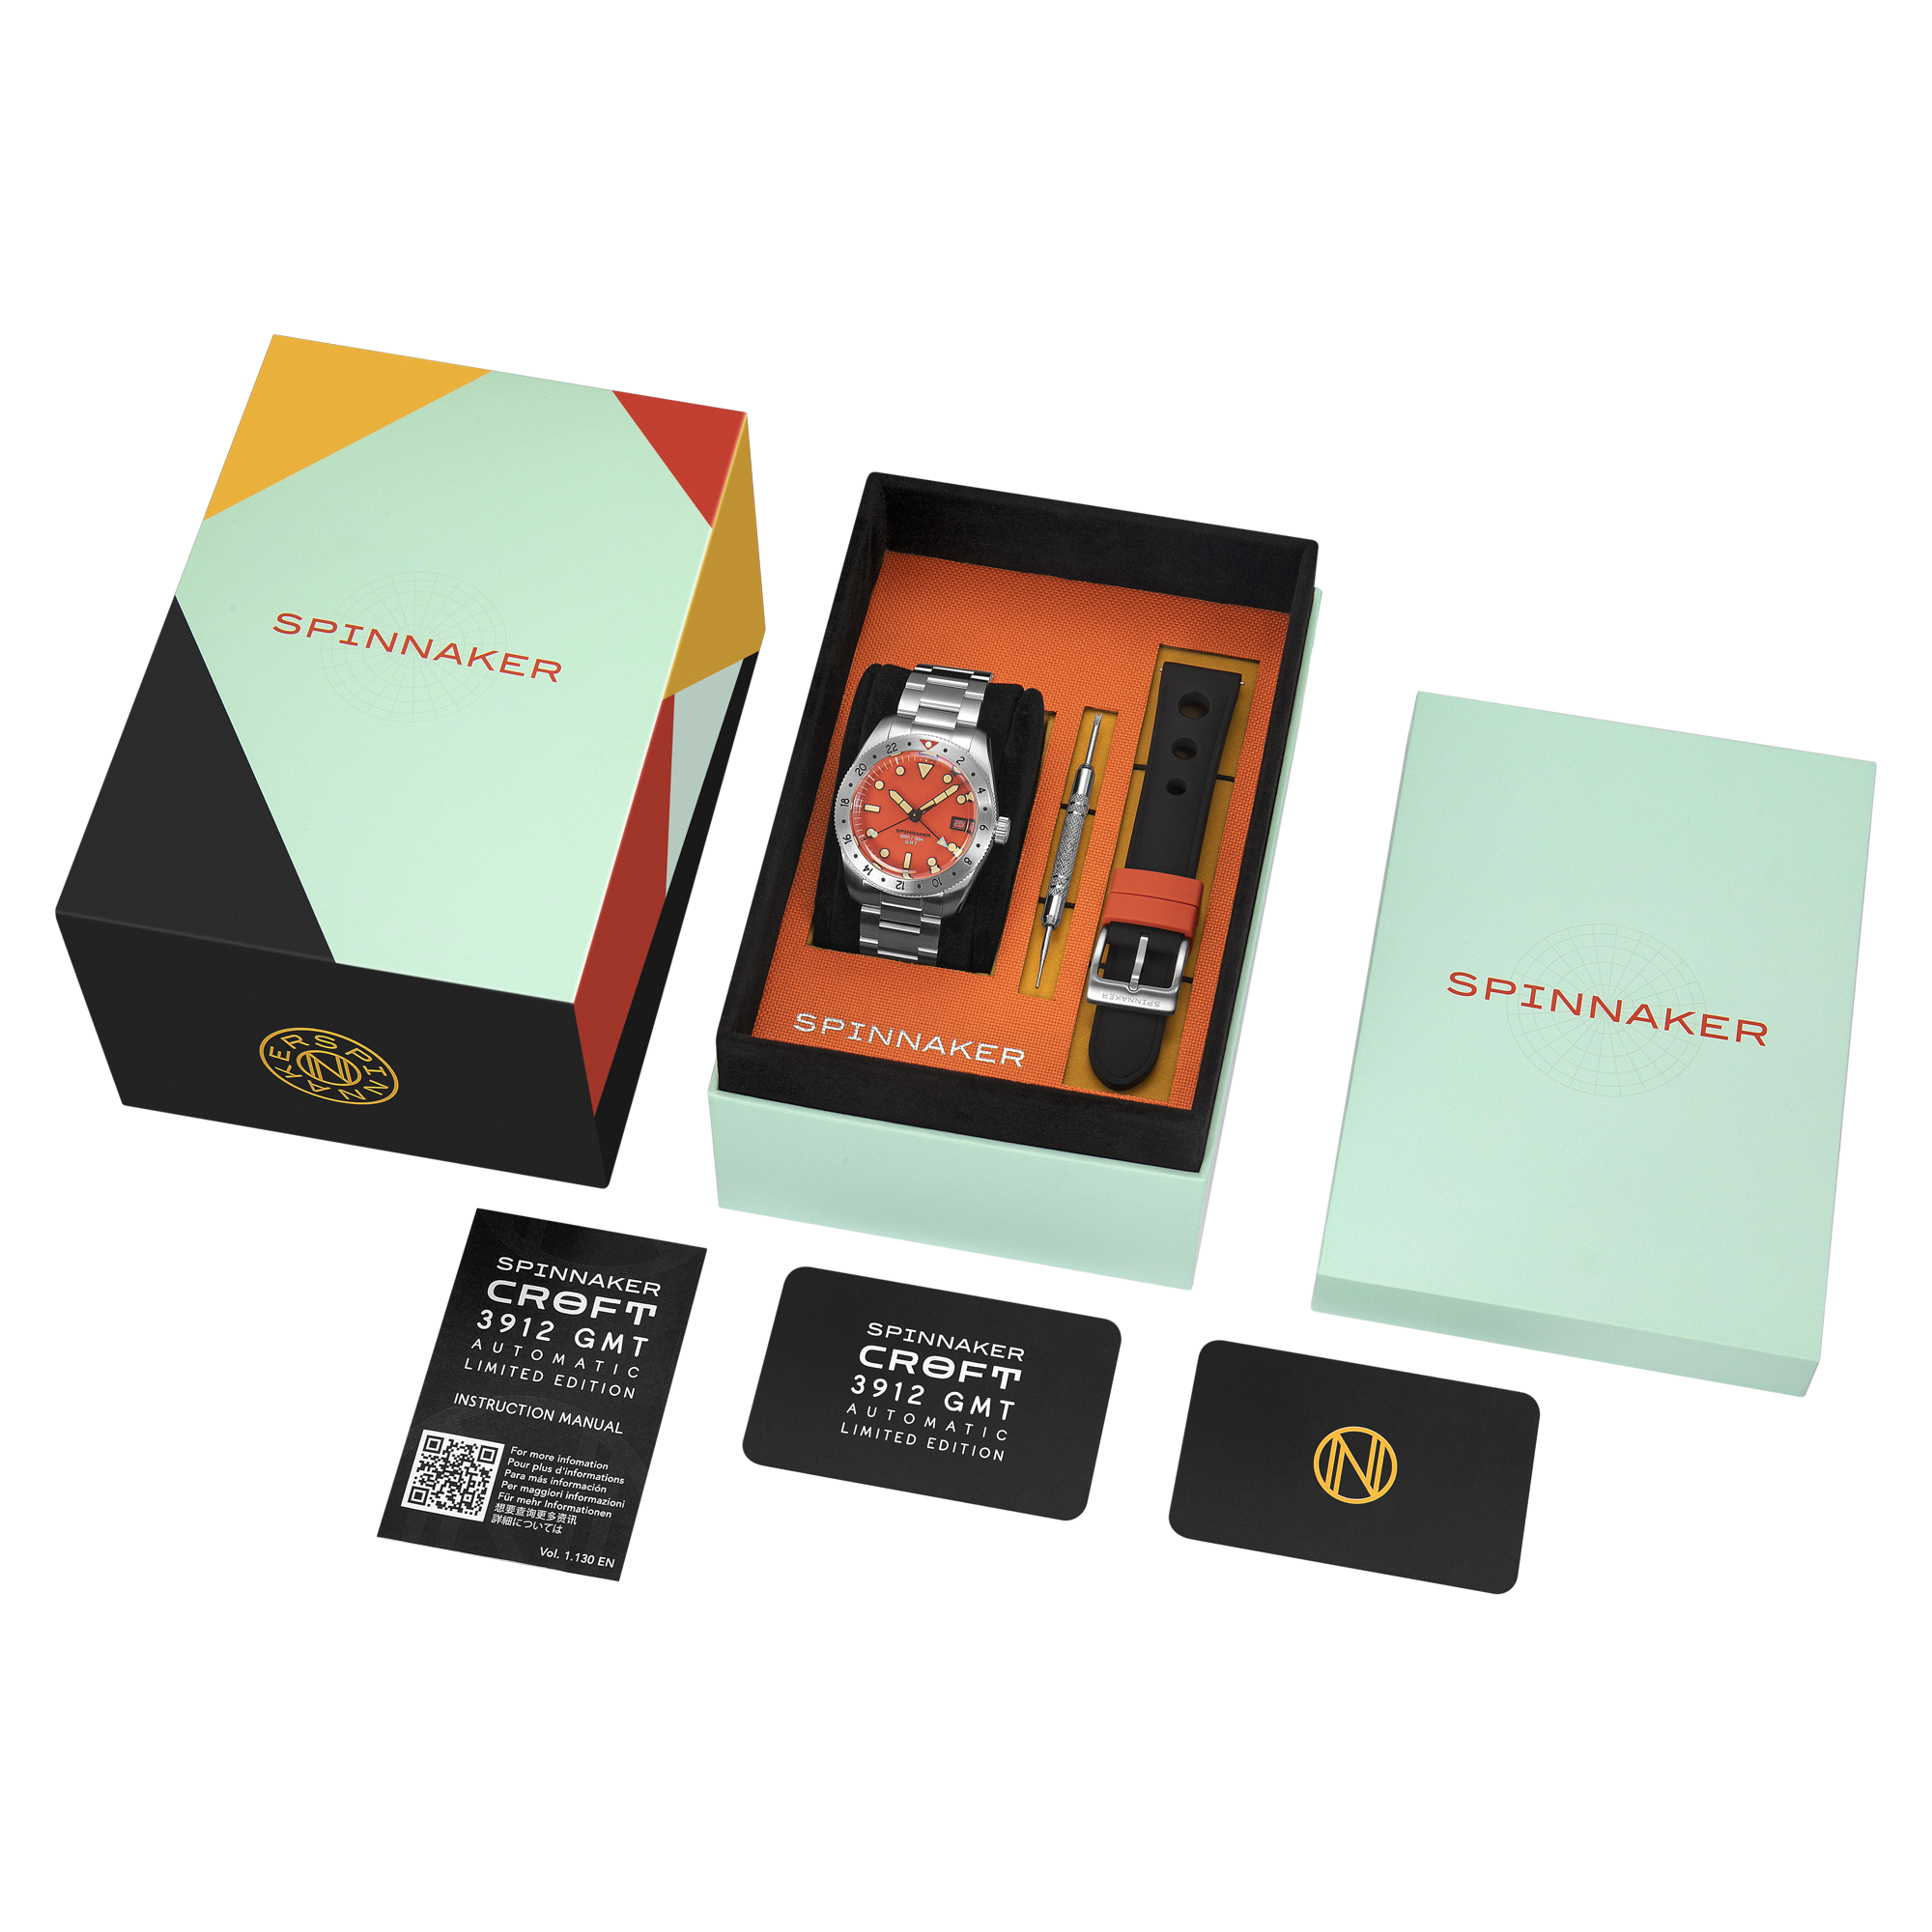 SPINNAKER Spinnaker Croft 3912 Gmt Automatic Limited Edition Retro Orange Men's Watch SP-5130-44